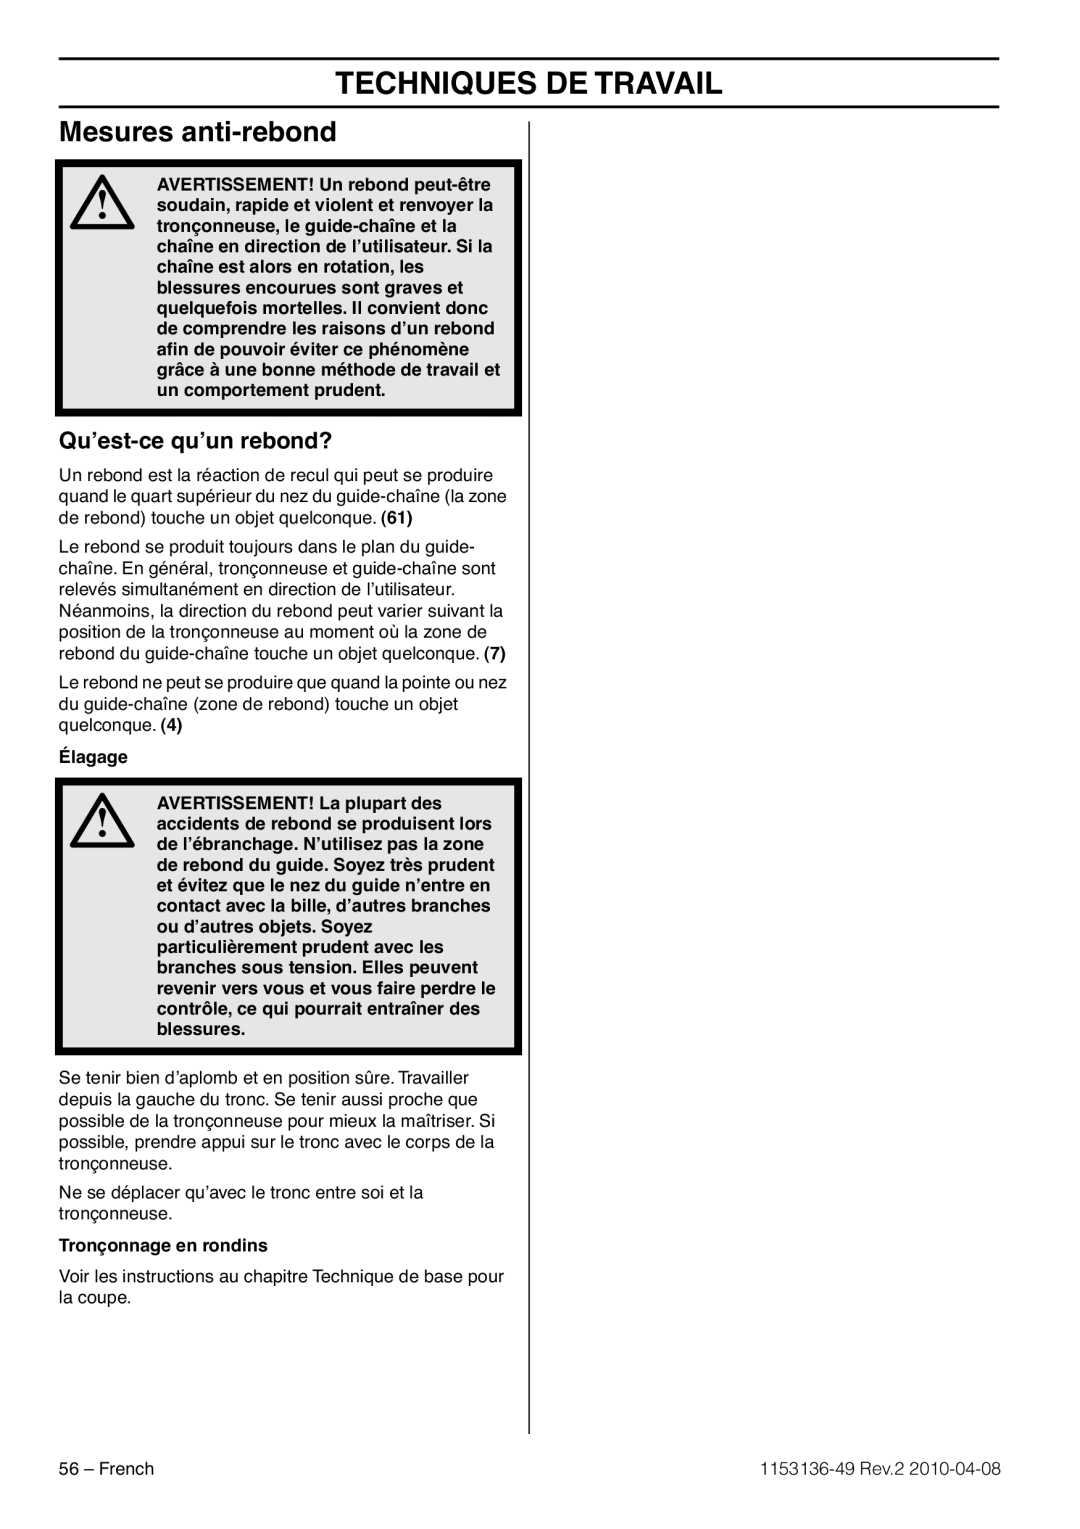 Husqvarna 1153136-49 manuel dutilisation Mesures anti-rebond, Qu’est-ce qu’un rebond?, Techniques De Travail 